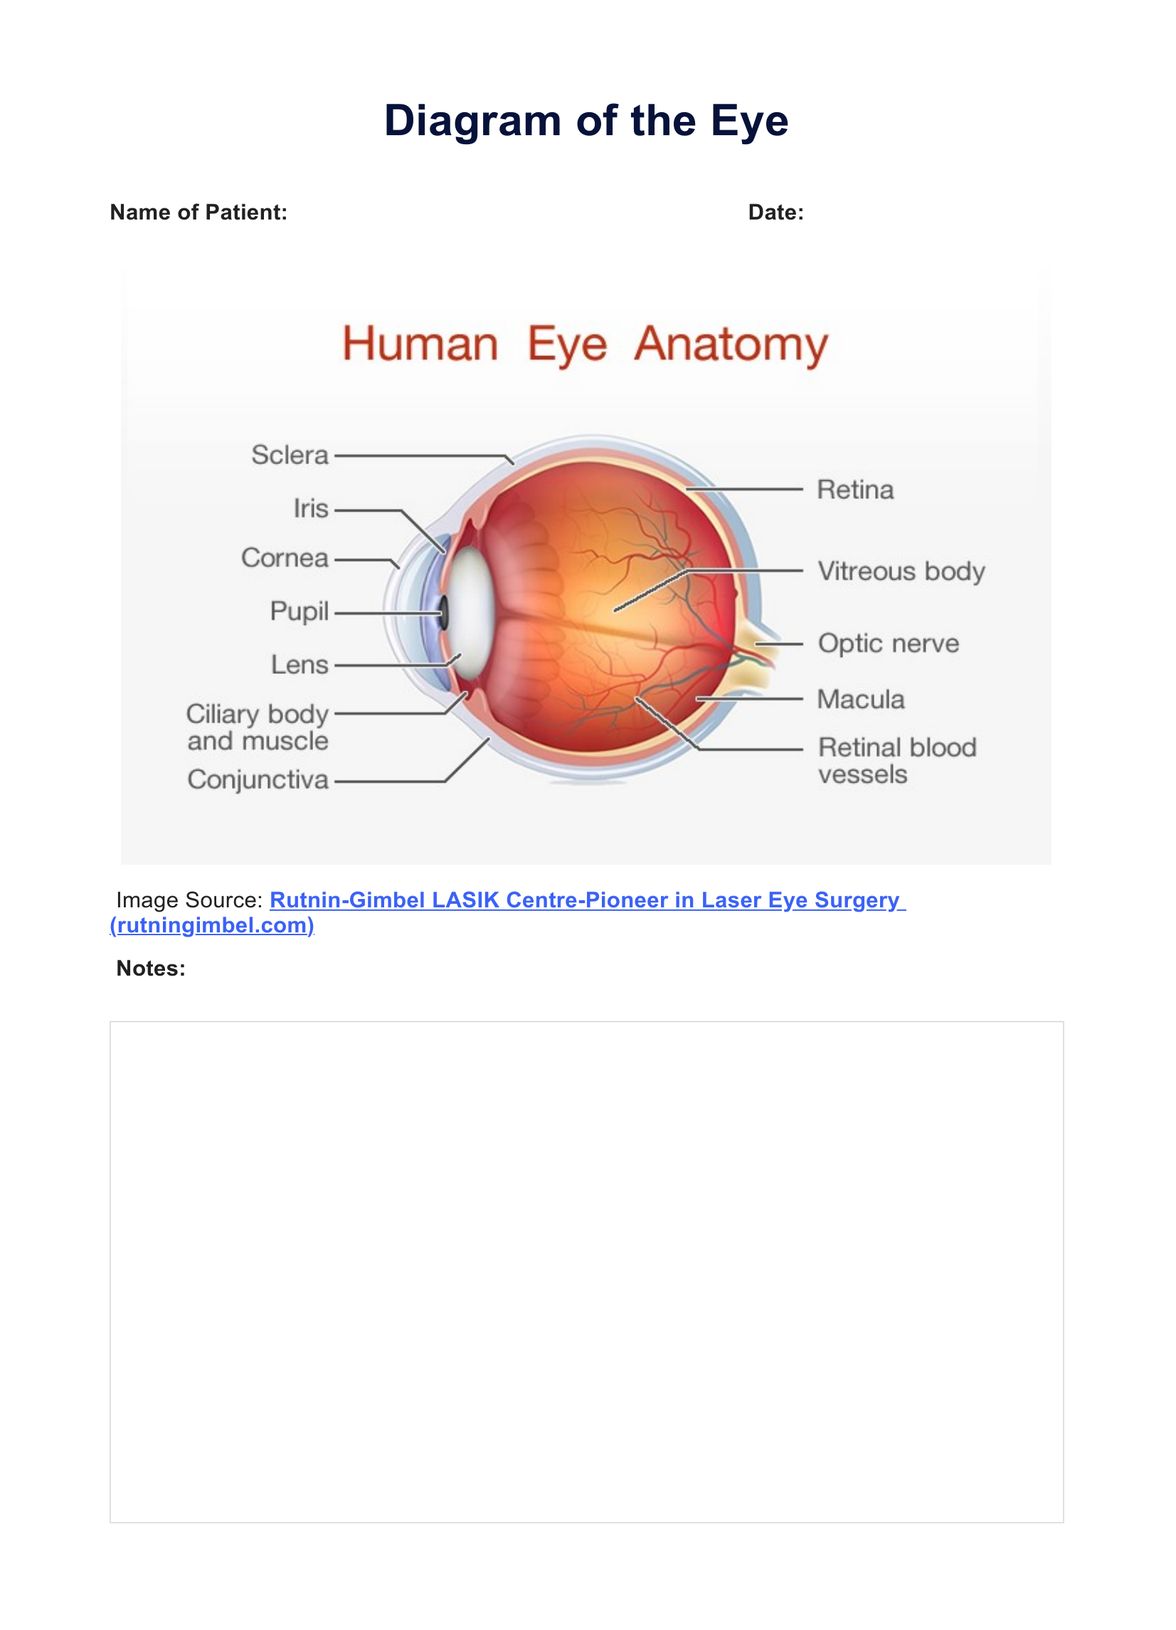 Diagram of the Eye PDF Example